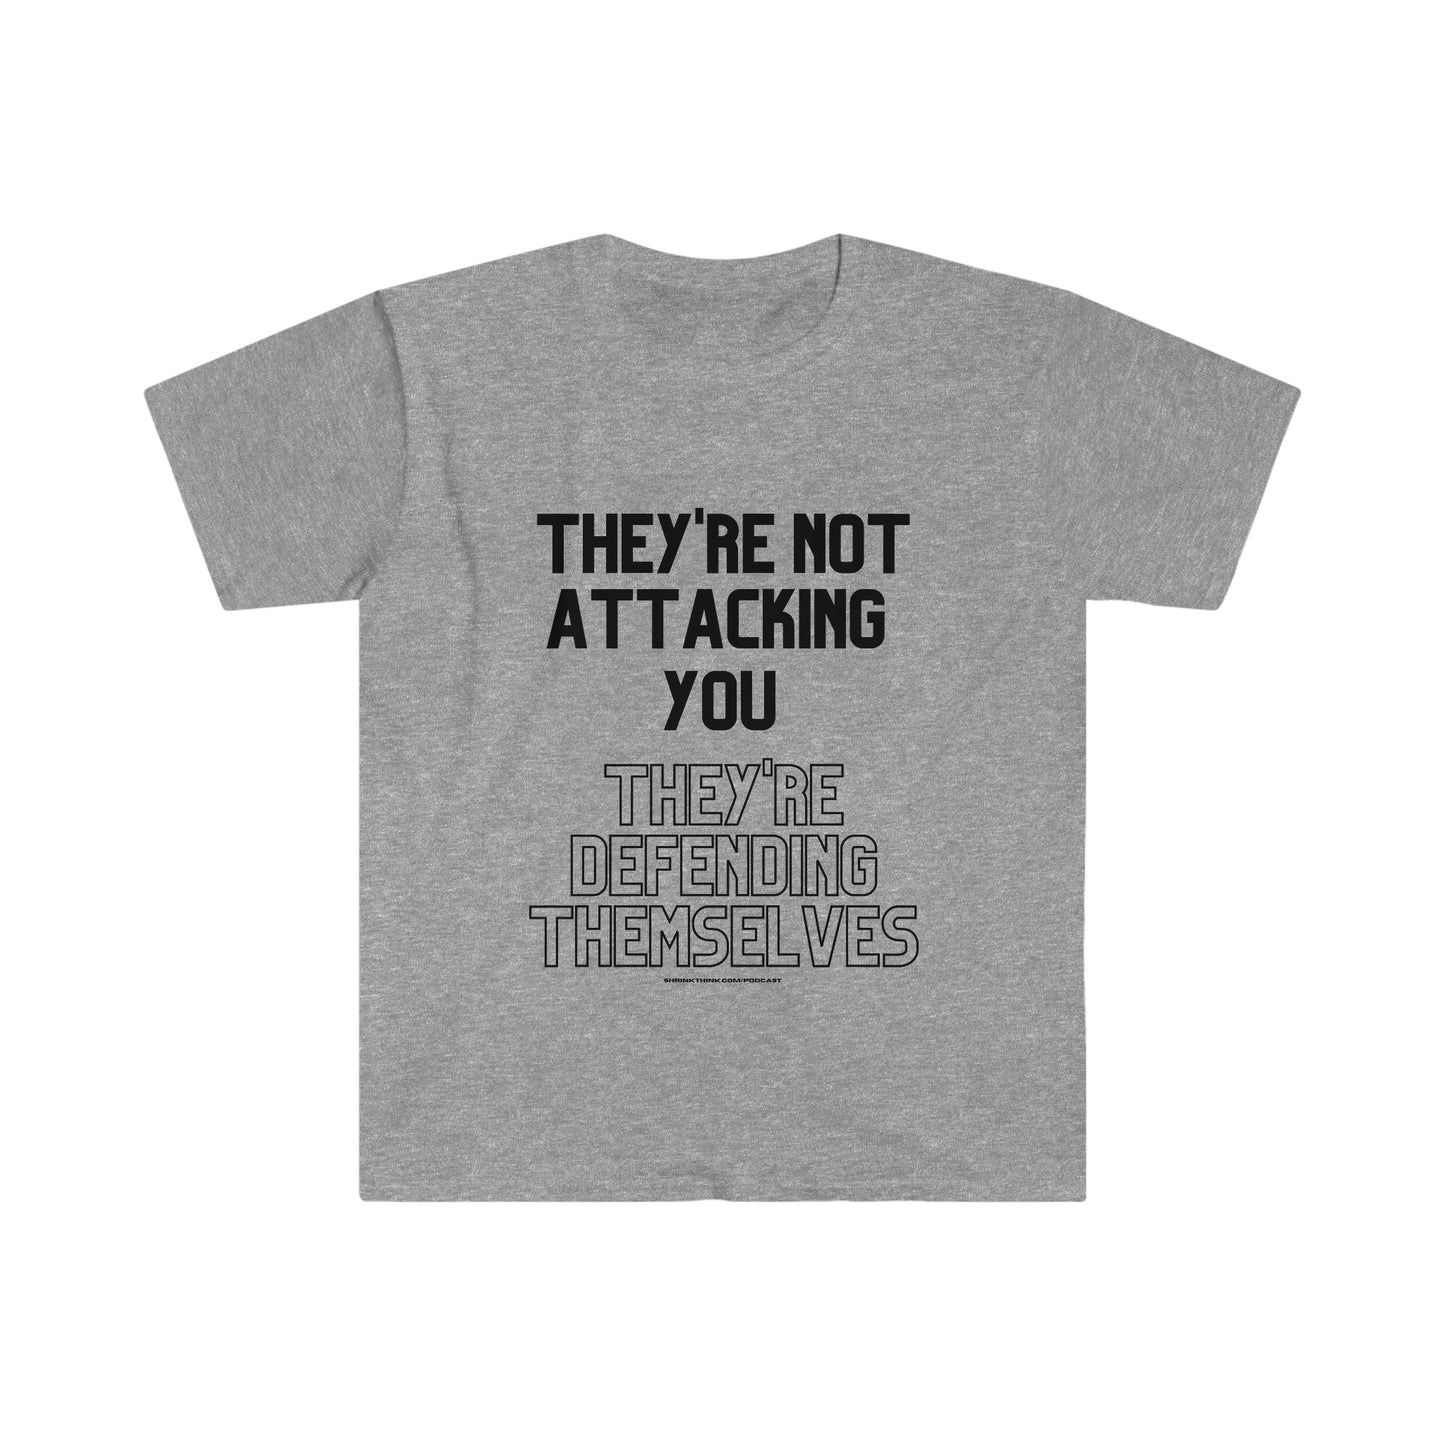 Not ATTACKING you T-Shirt